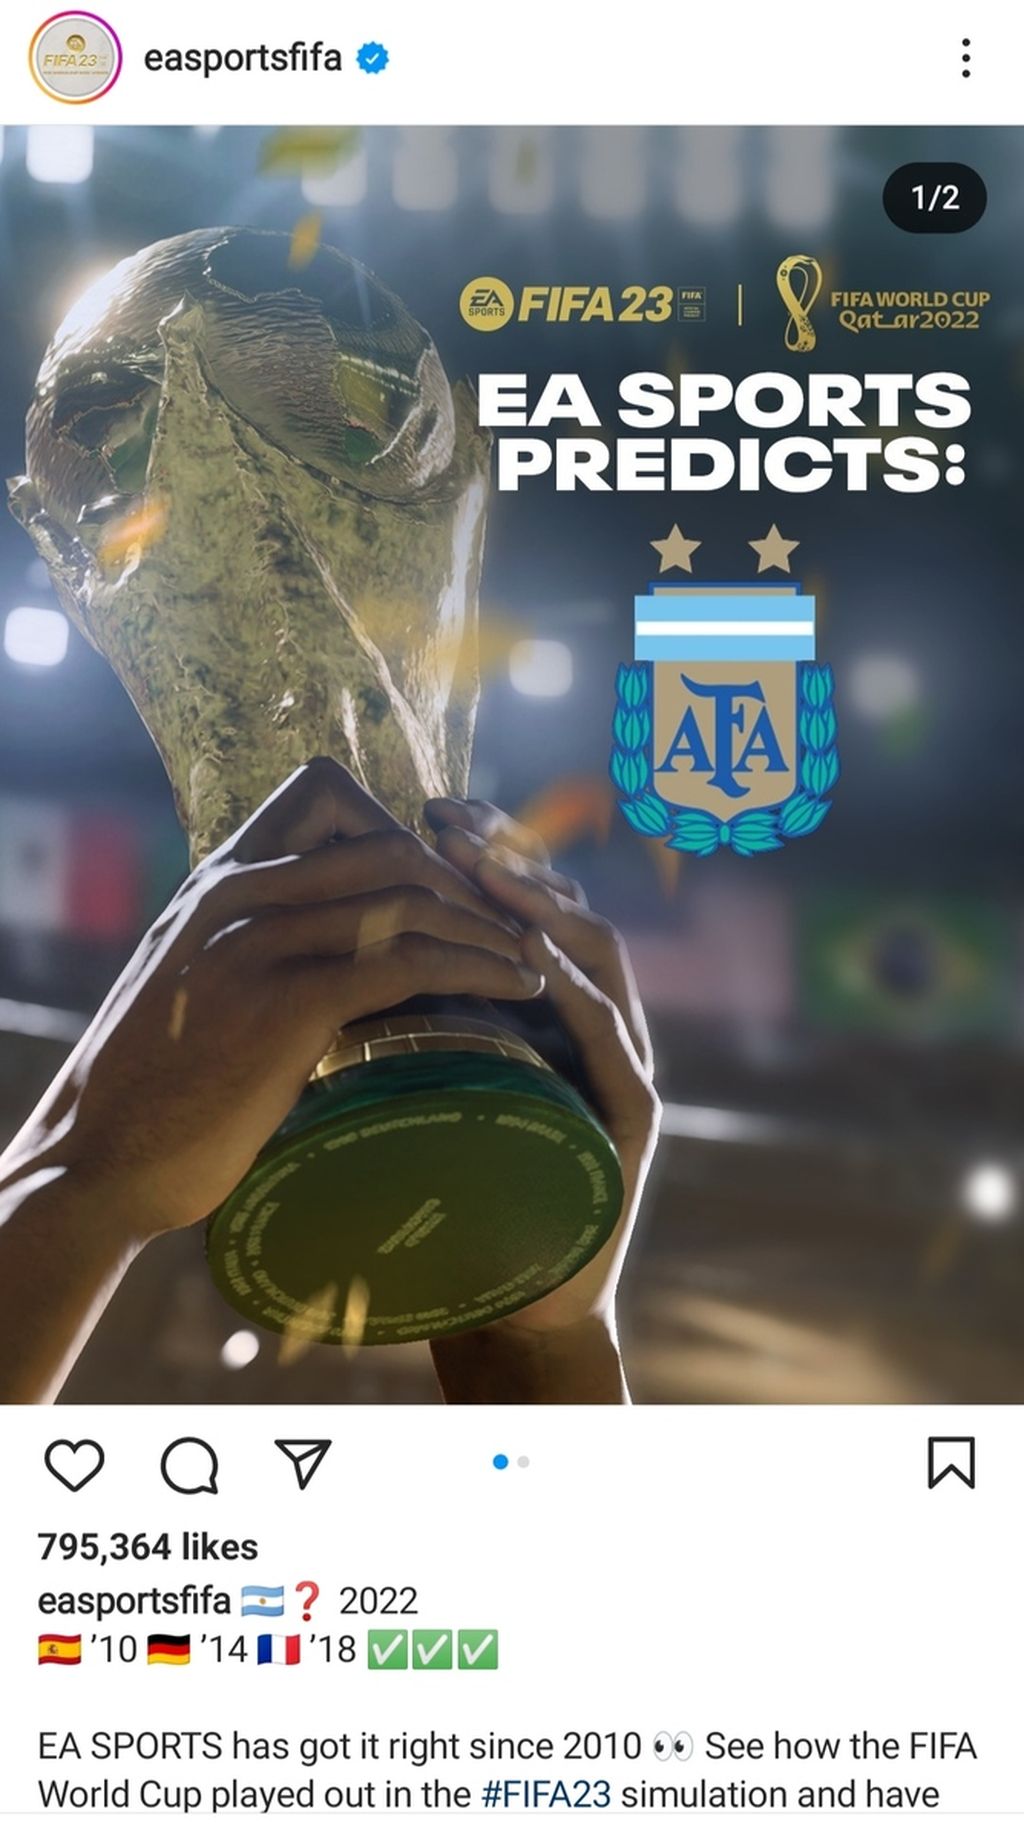 Gim FIFA, yang diprodukai EA Sports, memprediksi Argentina sebagai juara Piala Dunia Qatar. Mereka selalu tepat memprediksi juara Piala Dunia, sejak edisi 2010 di Afrika Selatan.